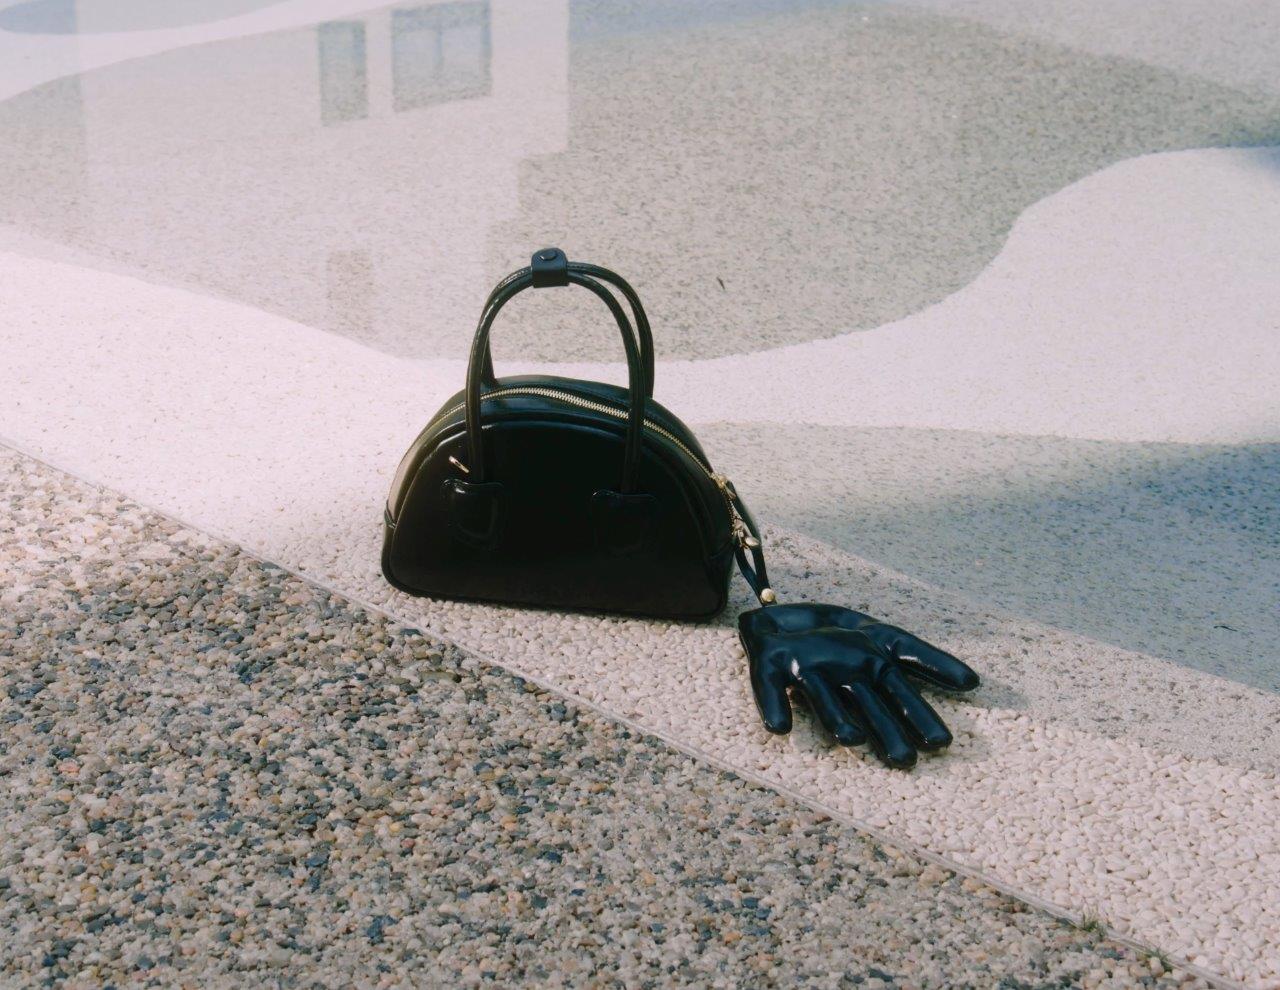 TACOS Handbag in Metallic color large size (M)